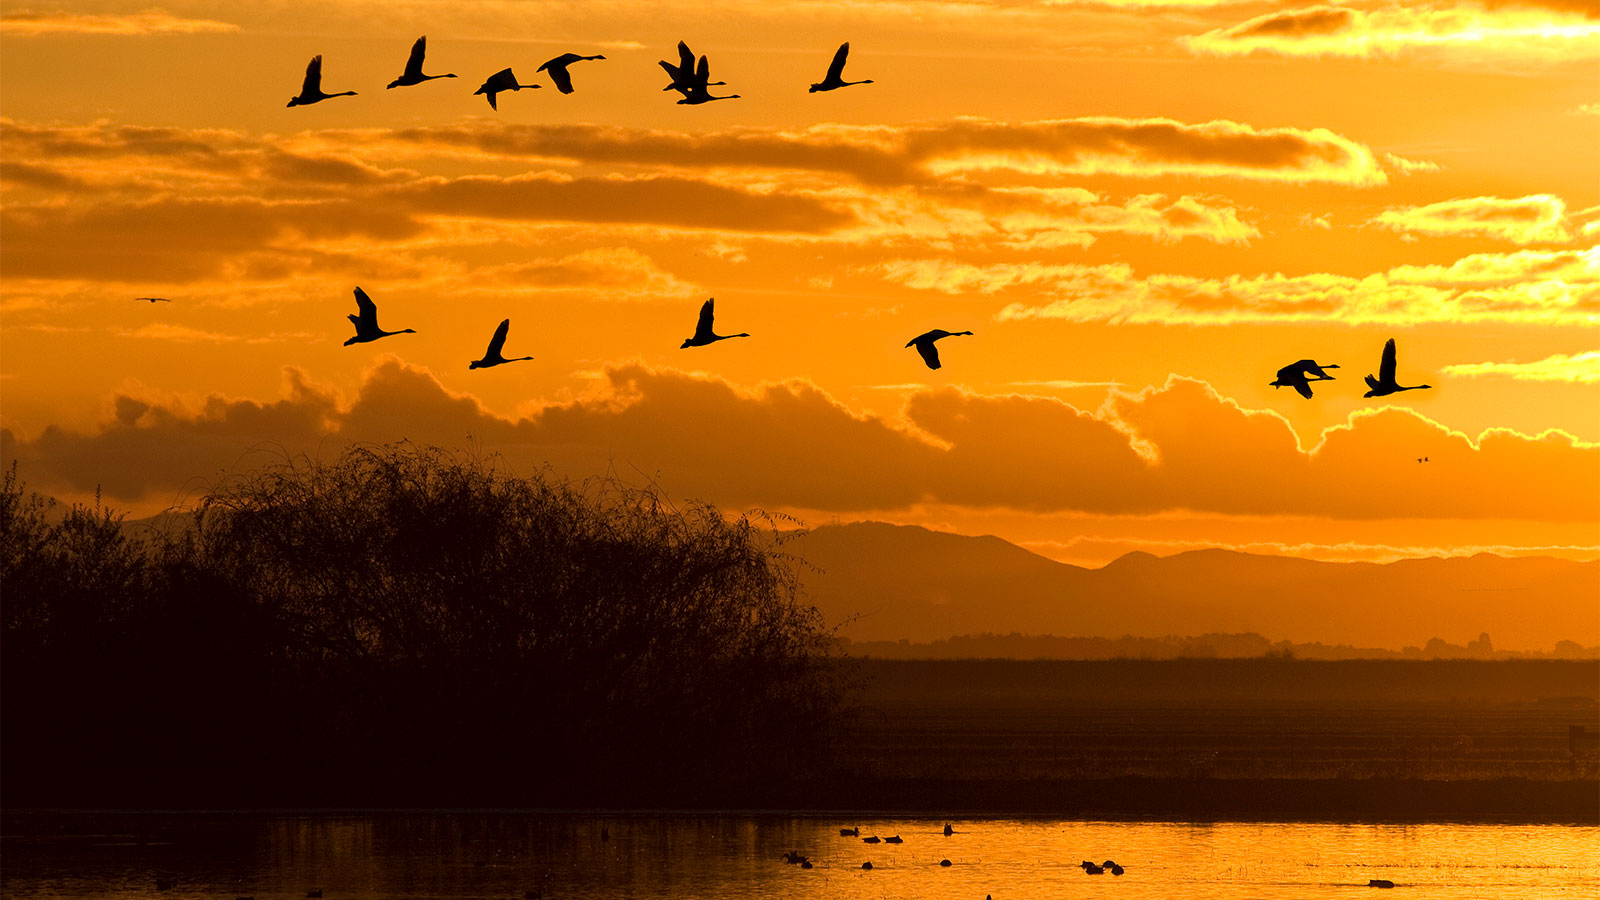 Migratory birds flying against an orange sunset